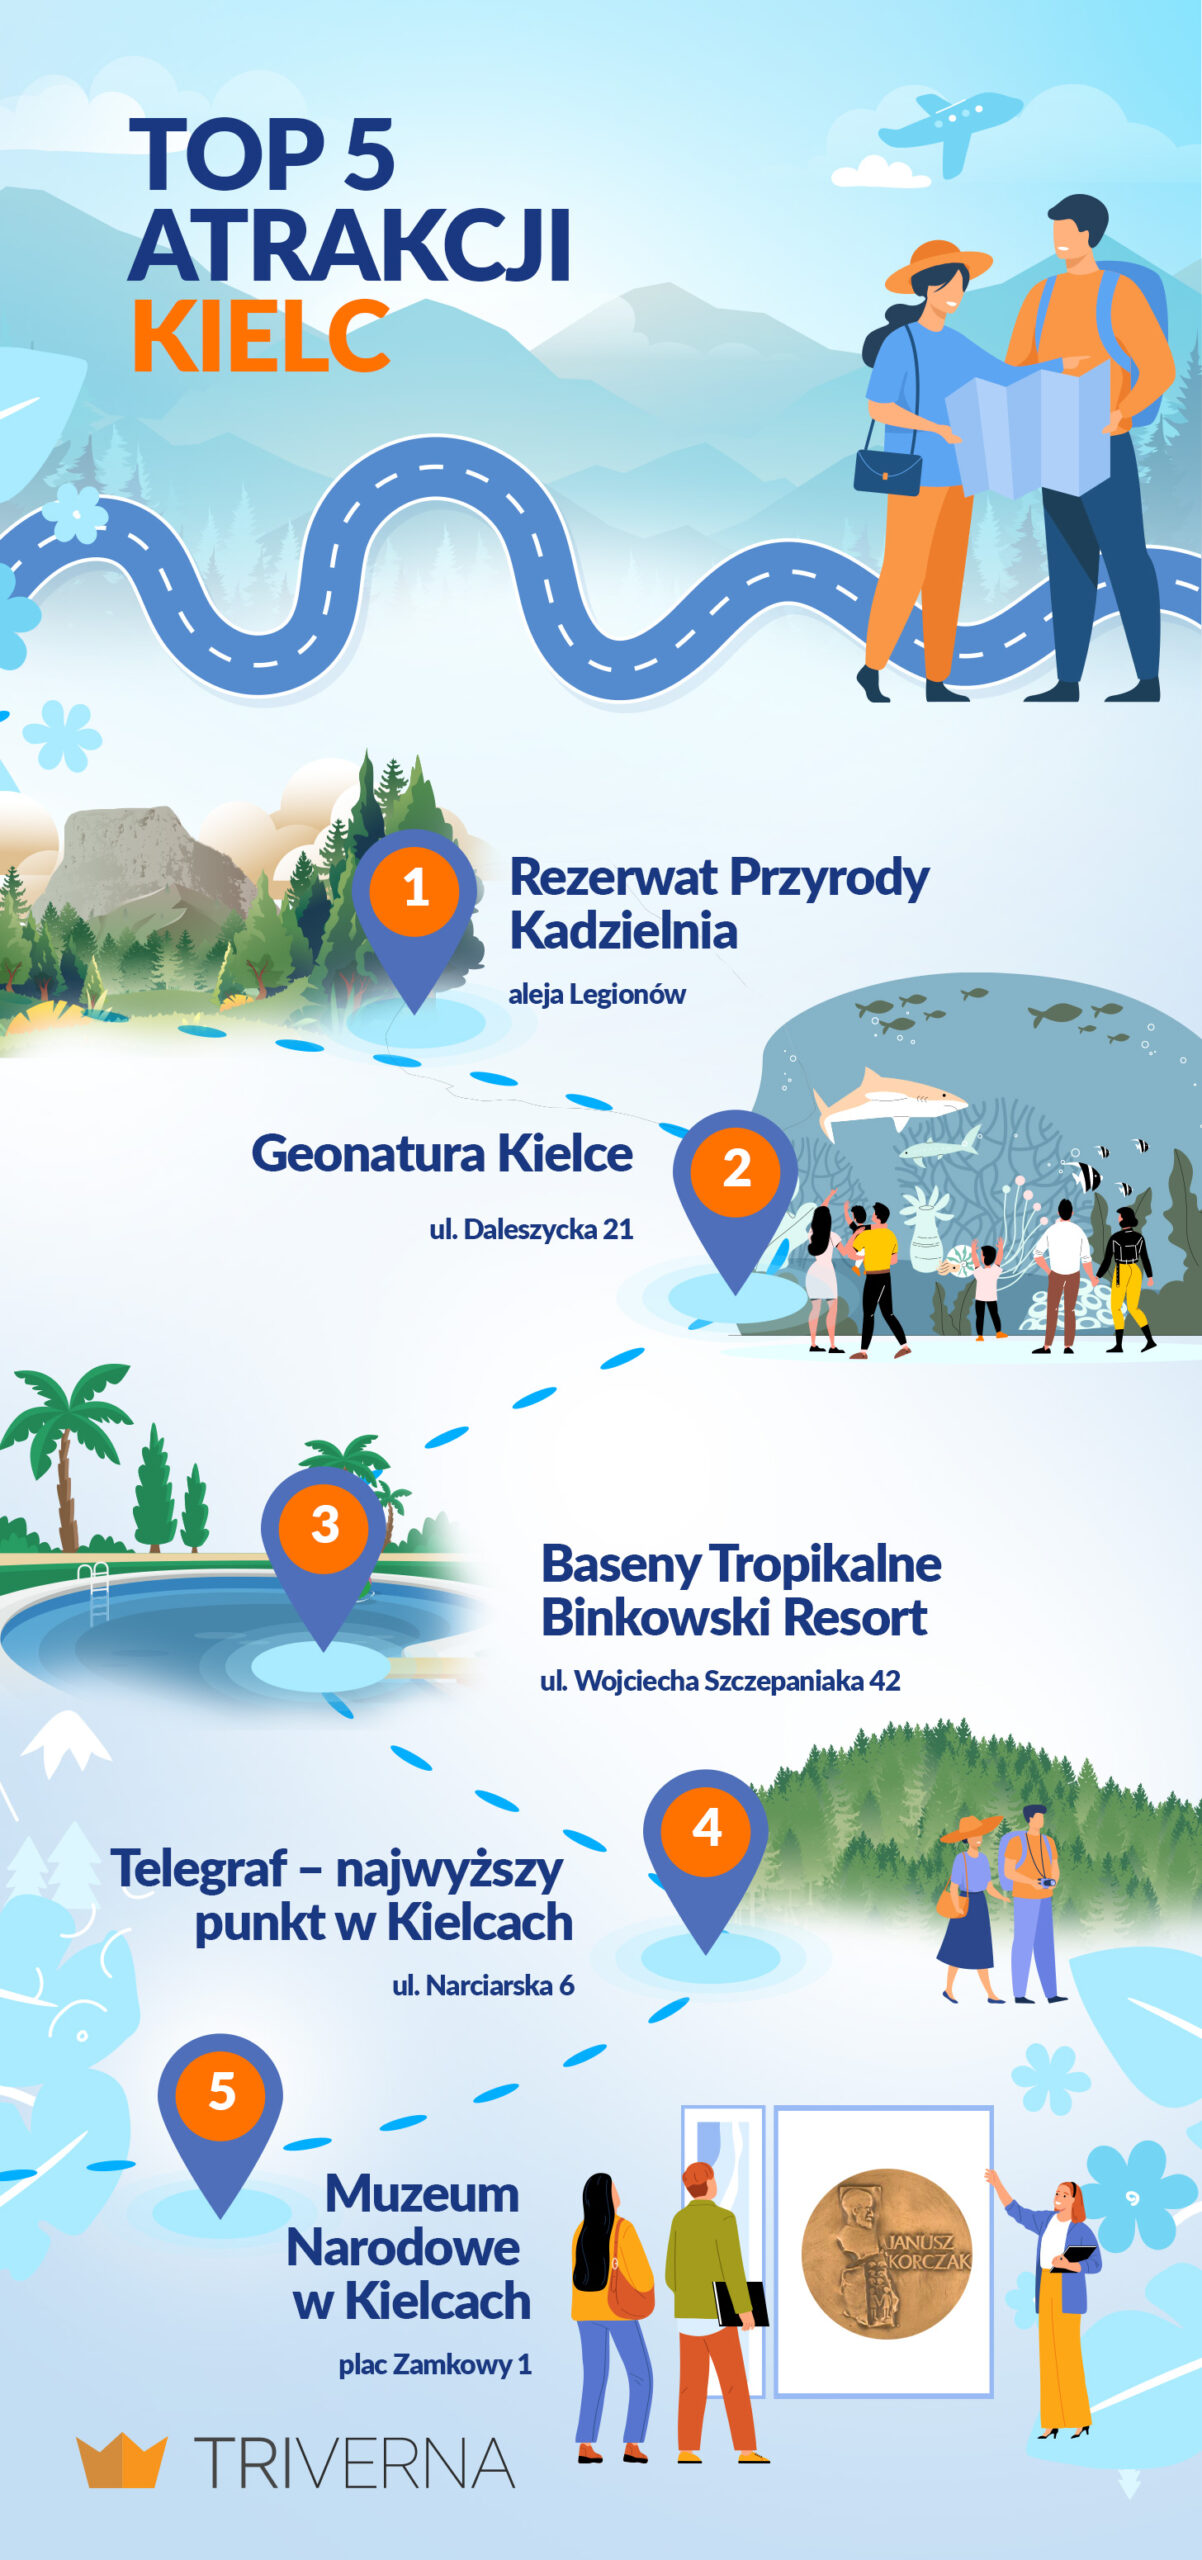 Top atrakcje Kielc - infografika
